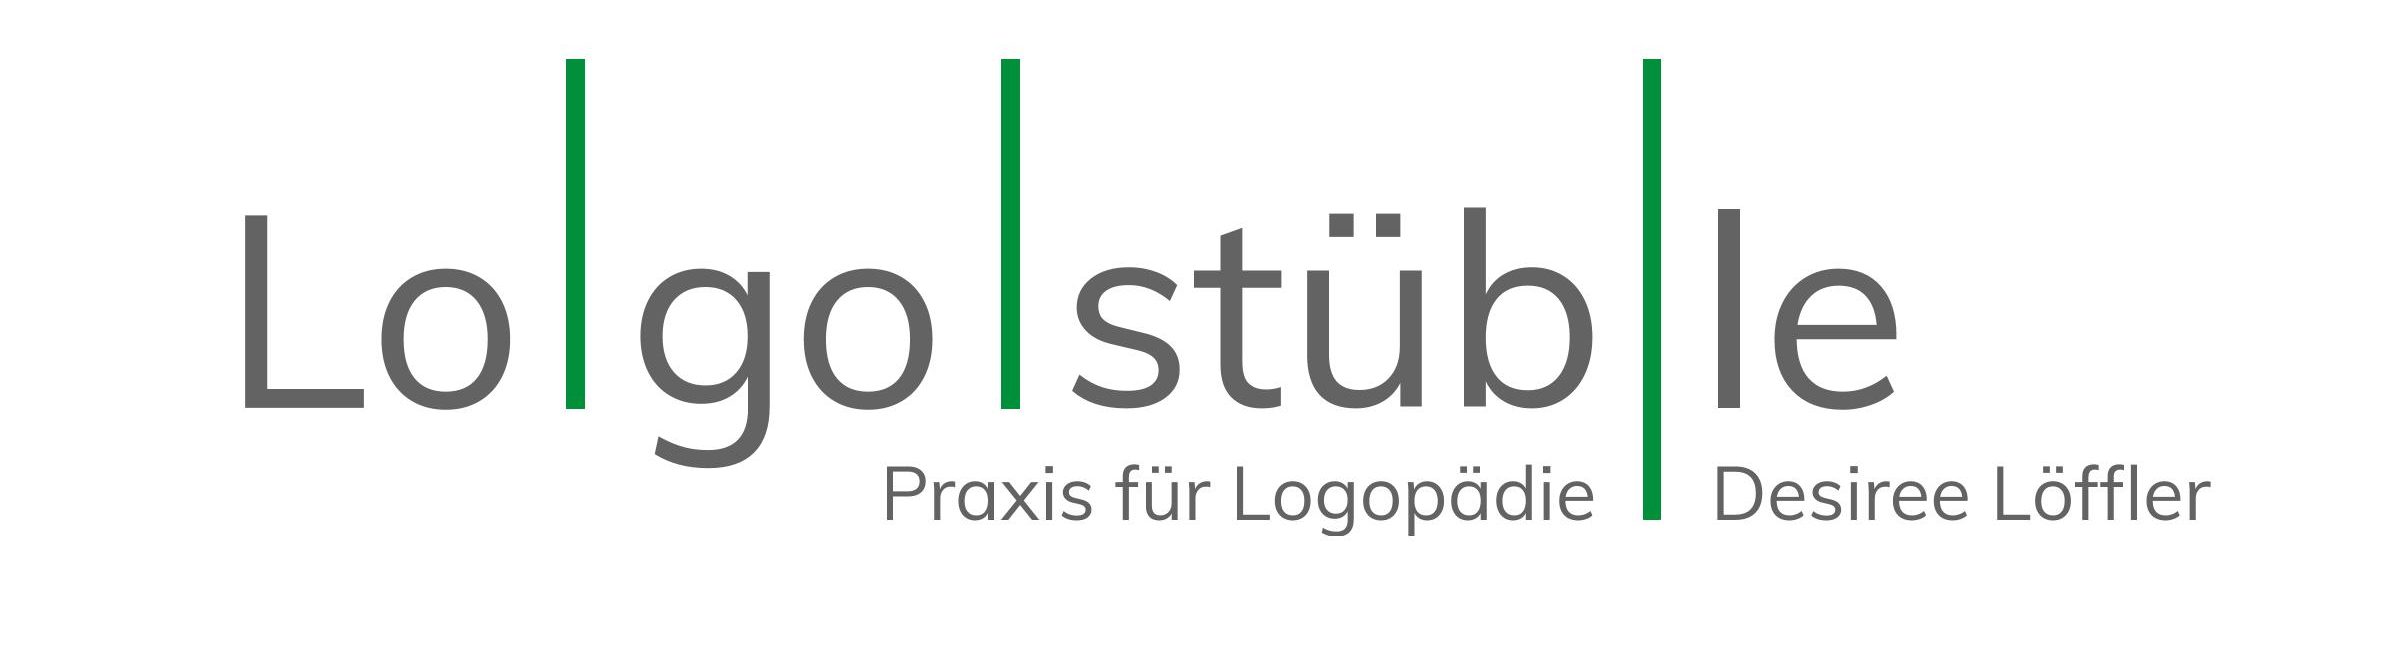 Logostüble – Praxis für Logopädie